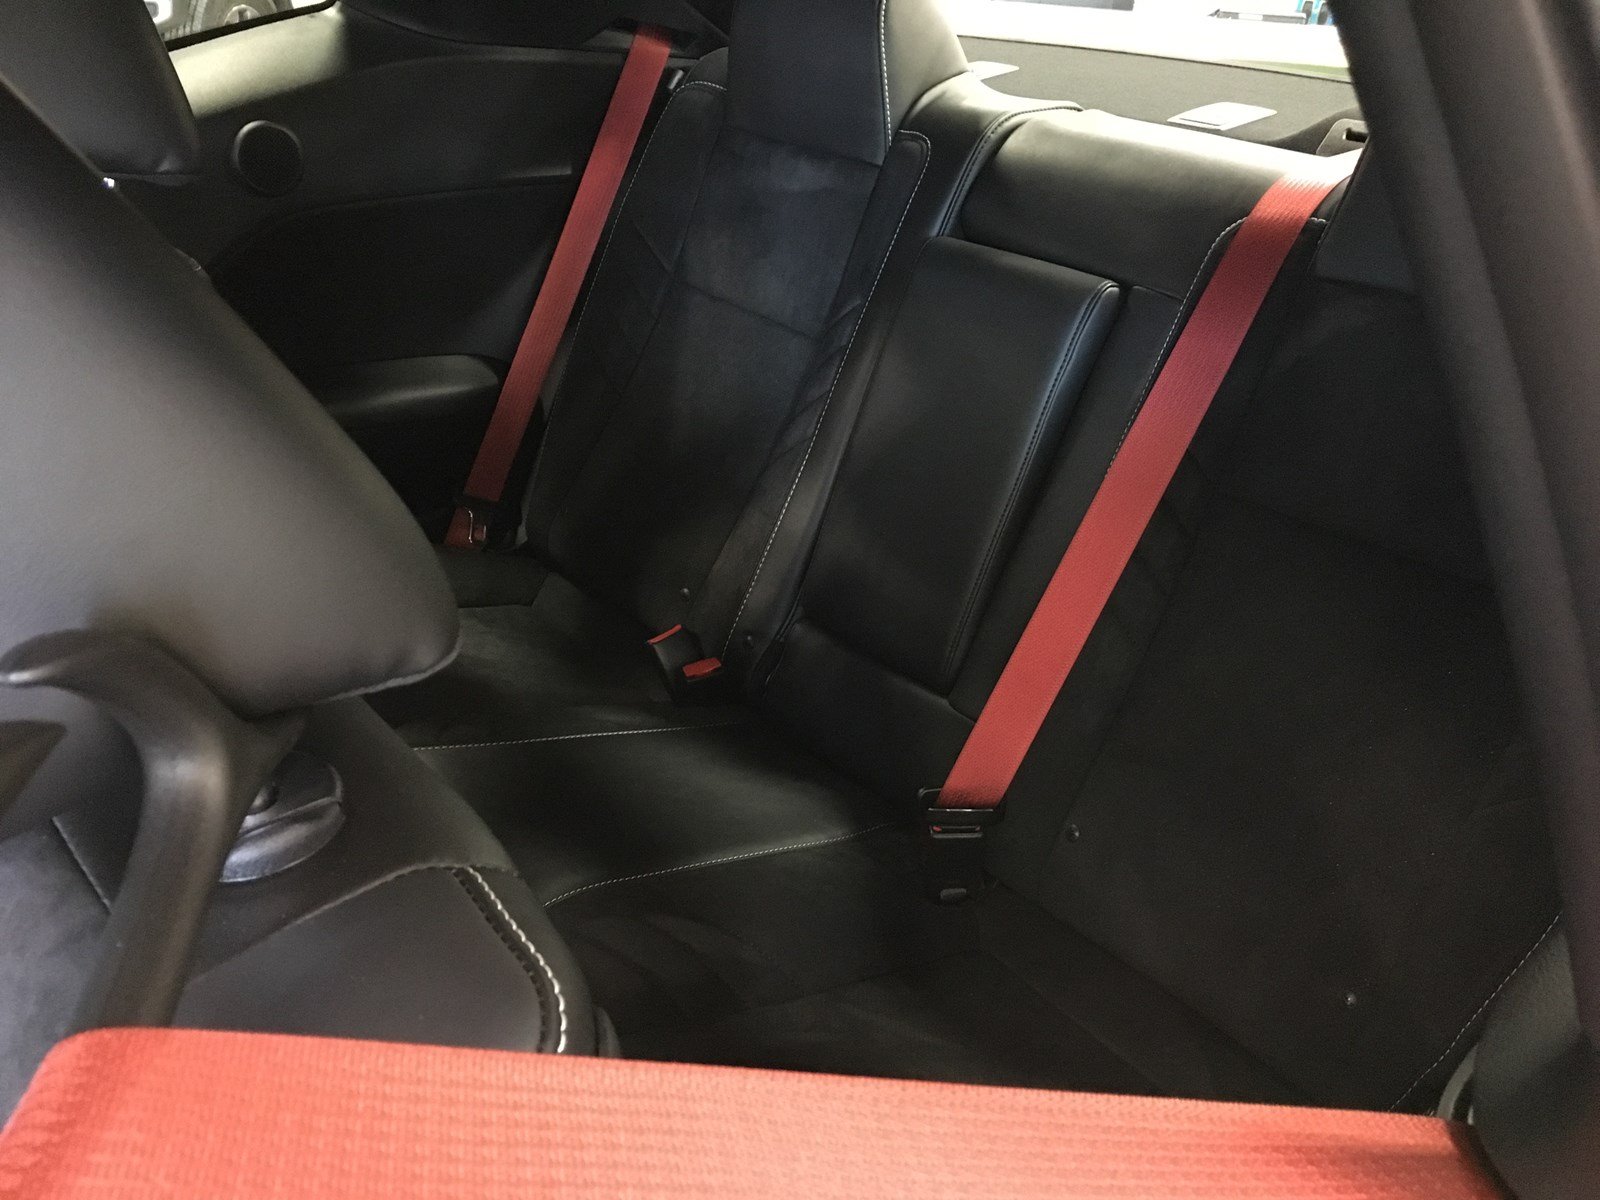 New 2018 Dodge Challenger SRT 392 6.4L Hemi Ventilated Seats Sunroof Navigation 2dr Car